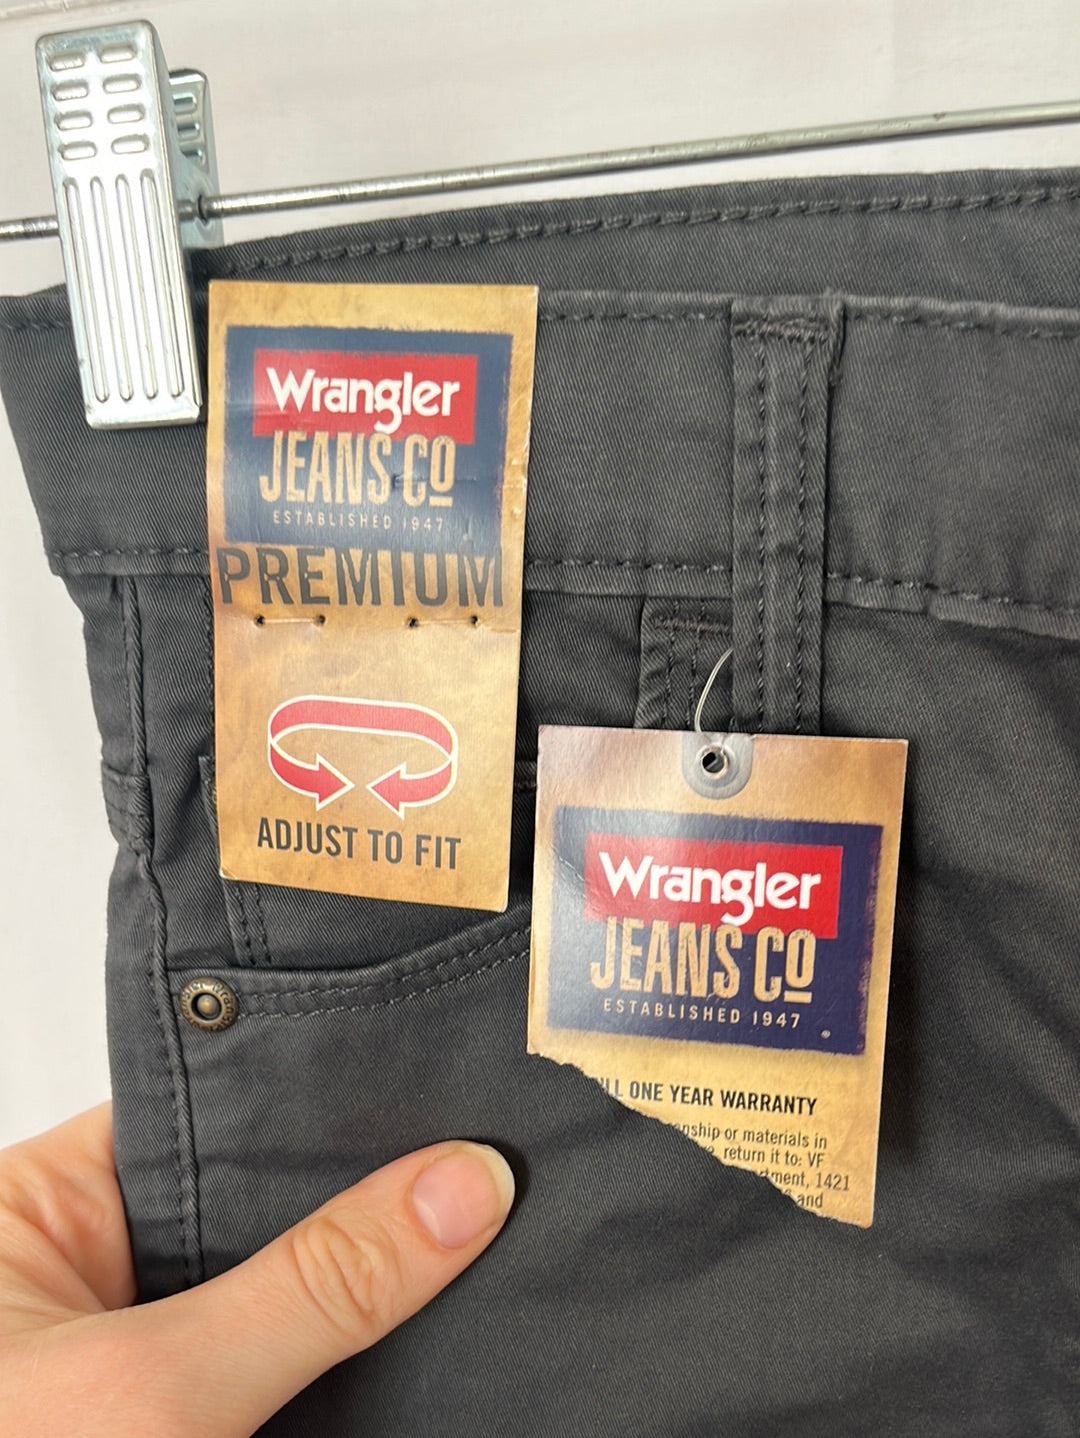 NWT -- Wrangler Grey Boys Adjustable Waist Jeans -- 7 Regular